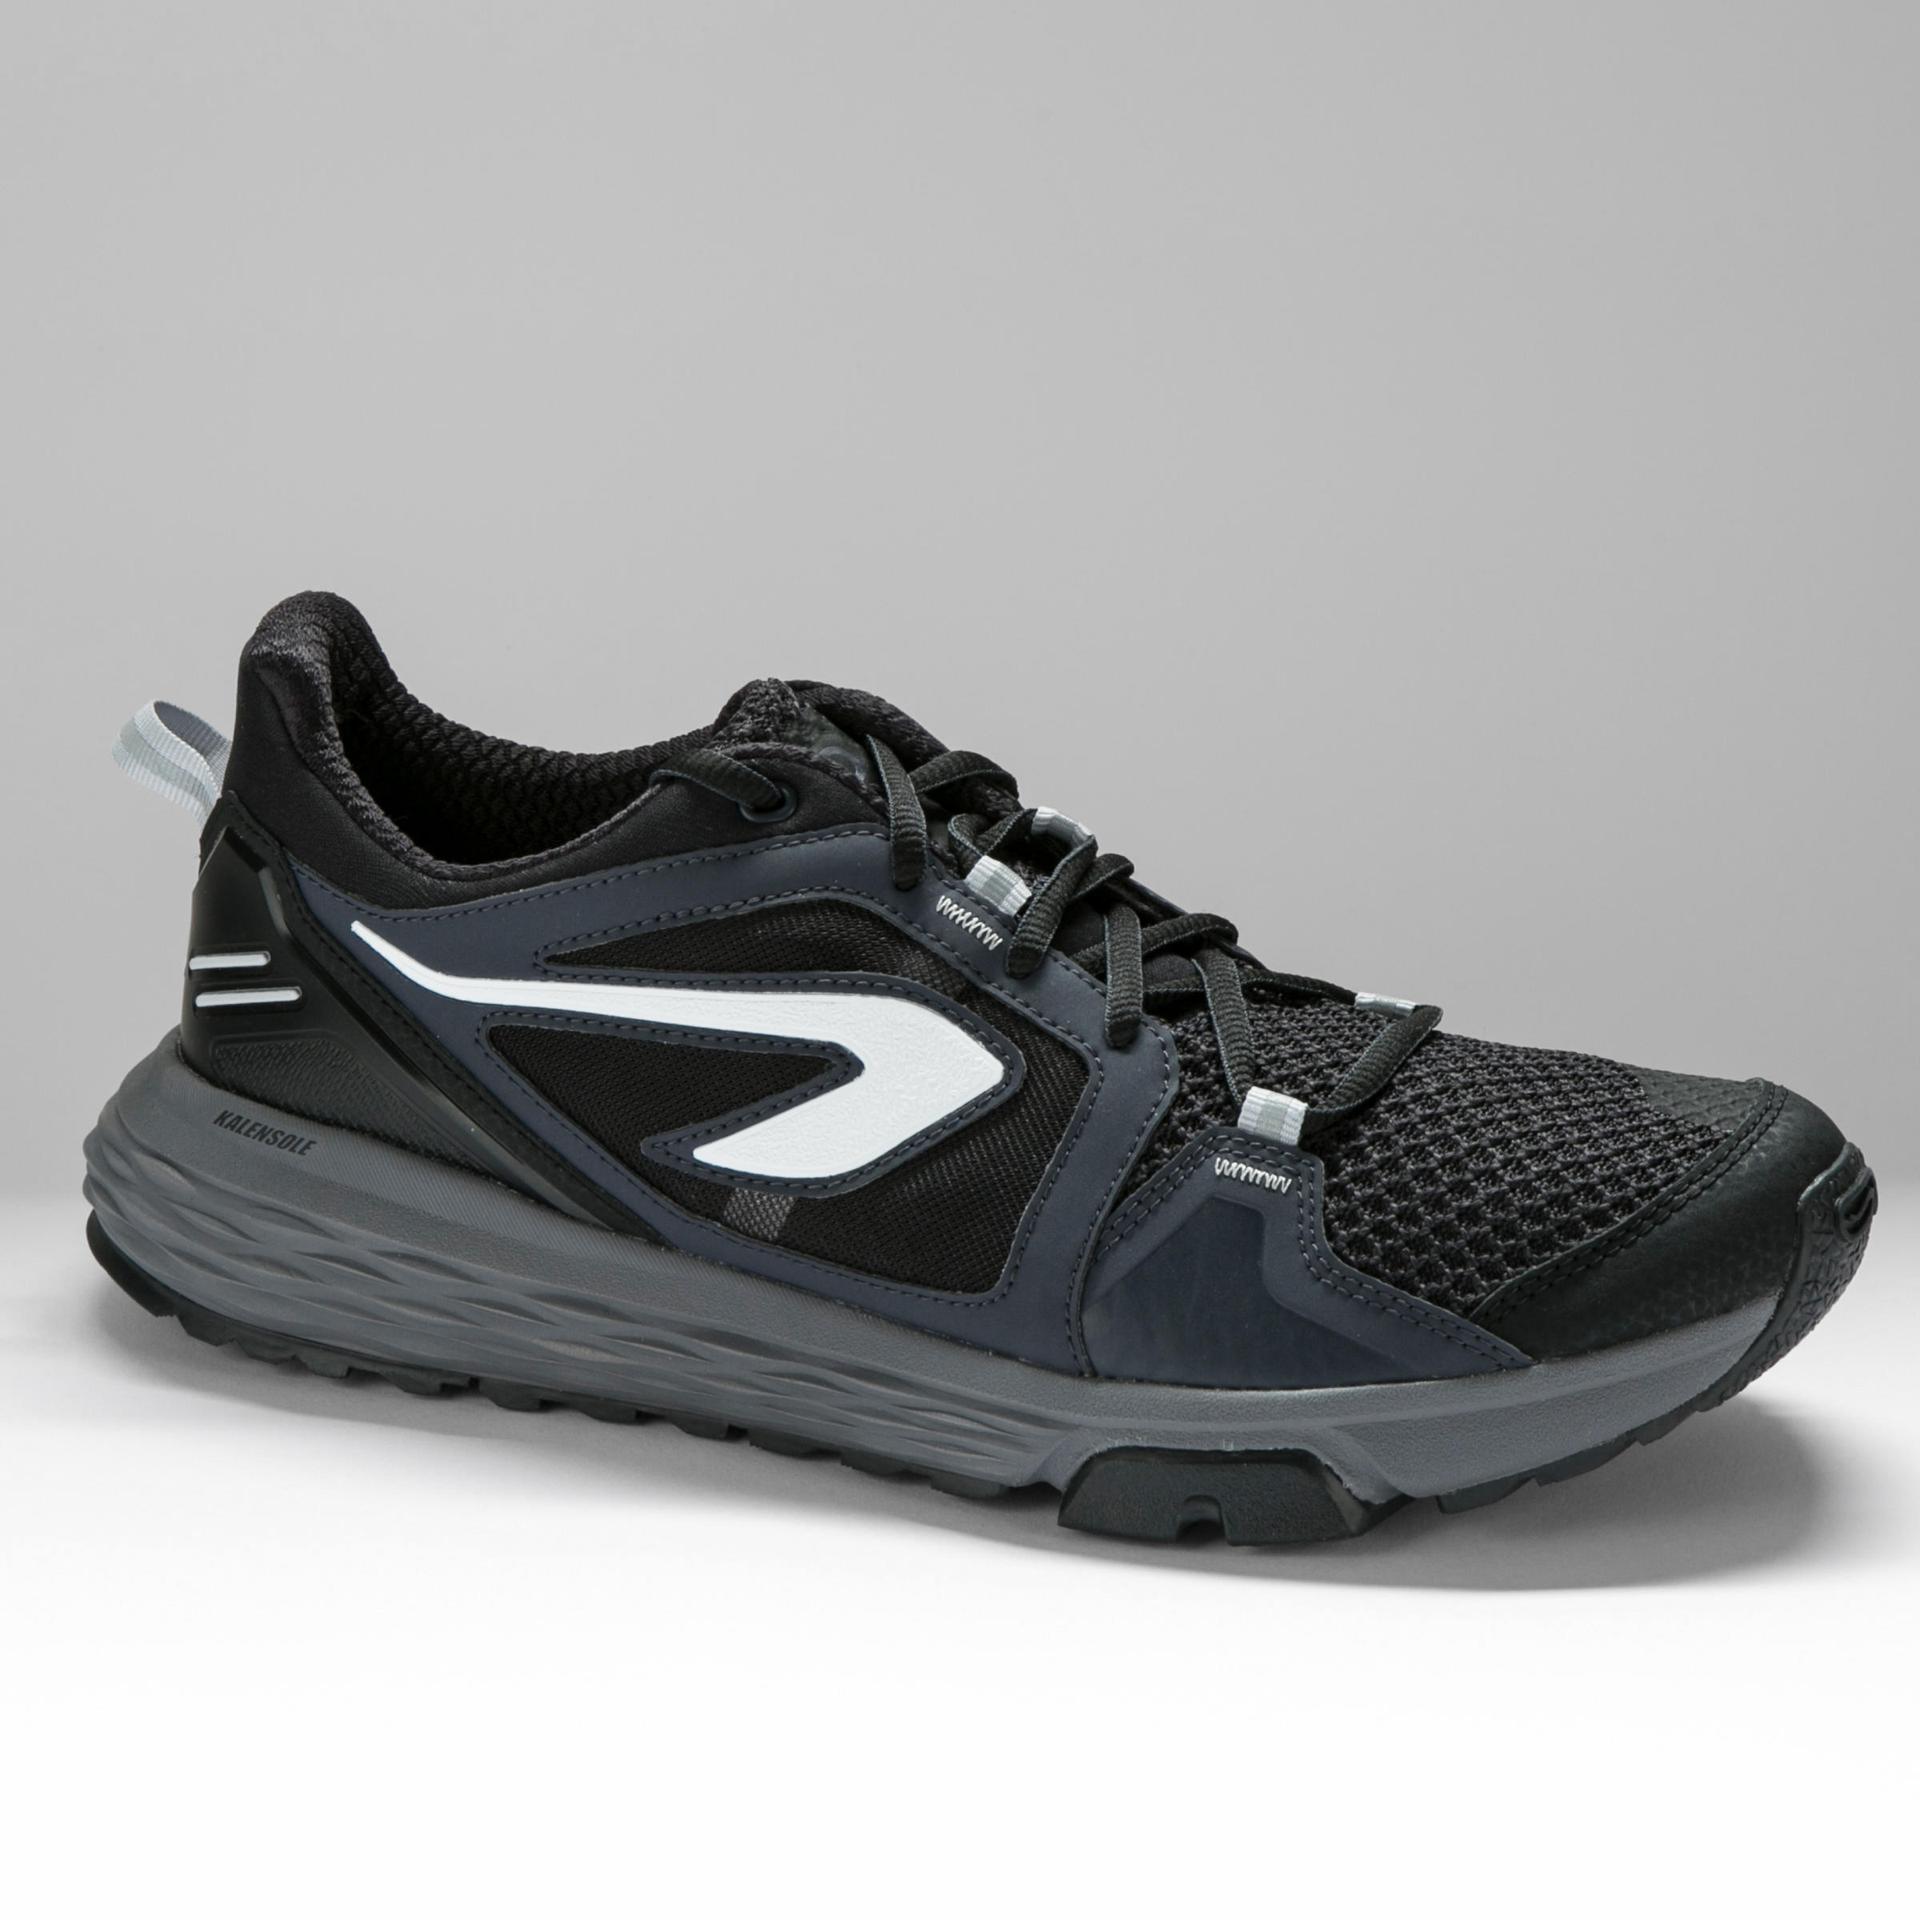 men's running shoes run comfort grip - black